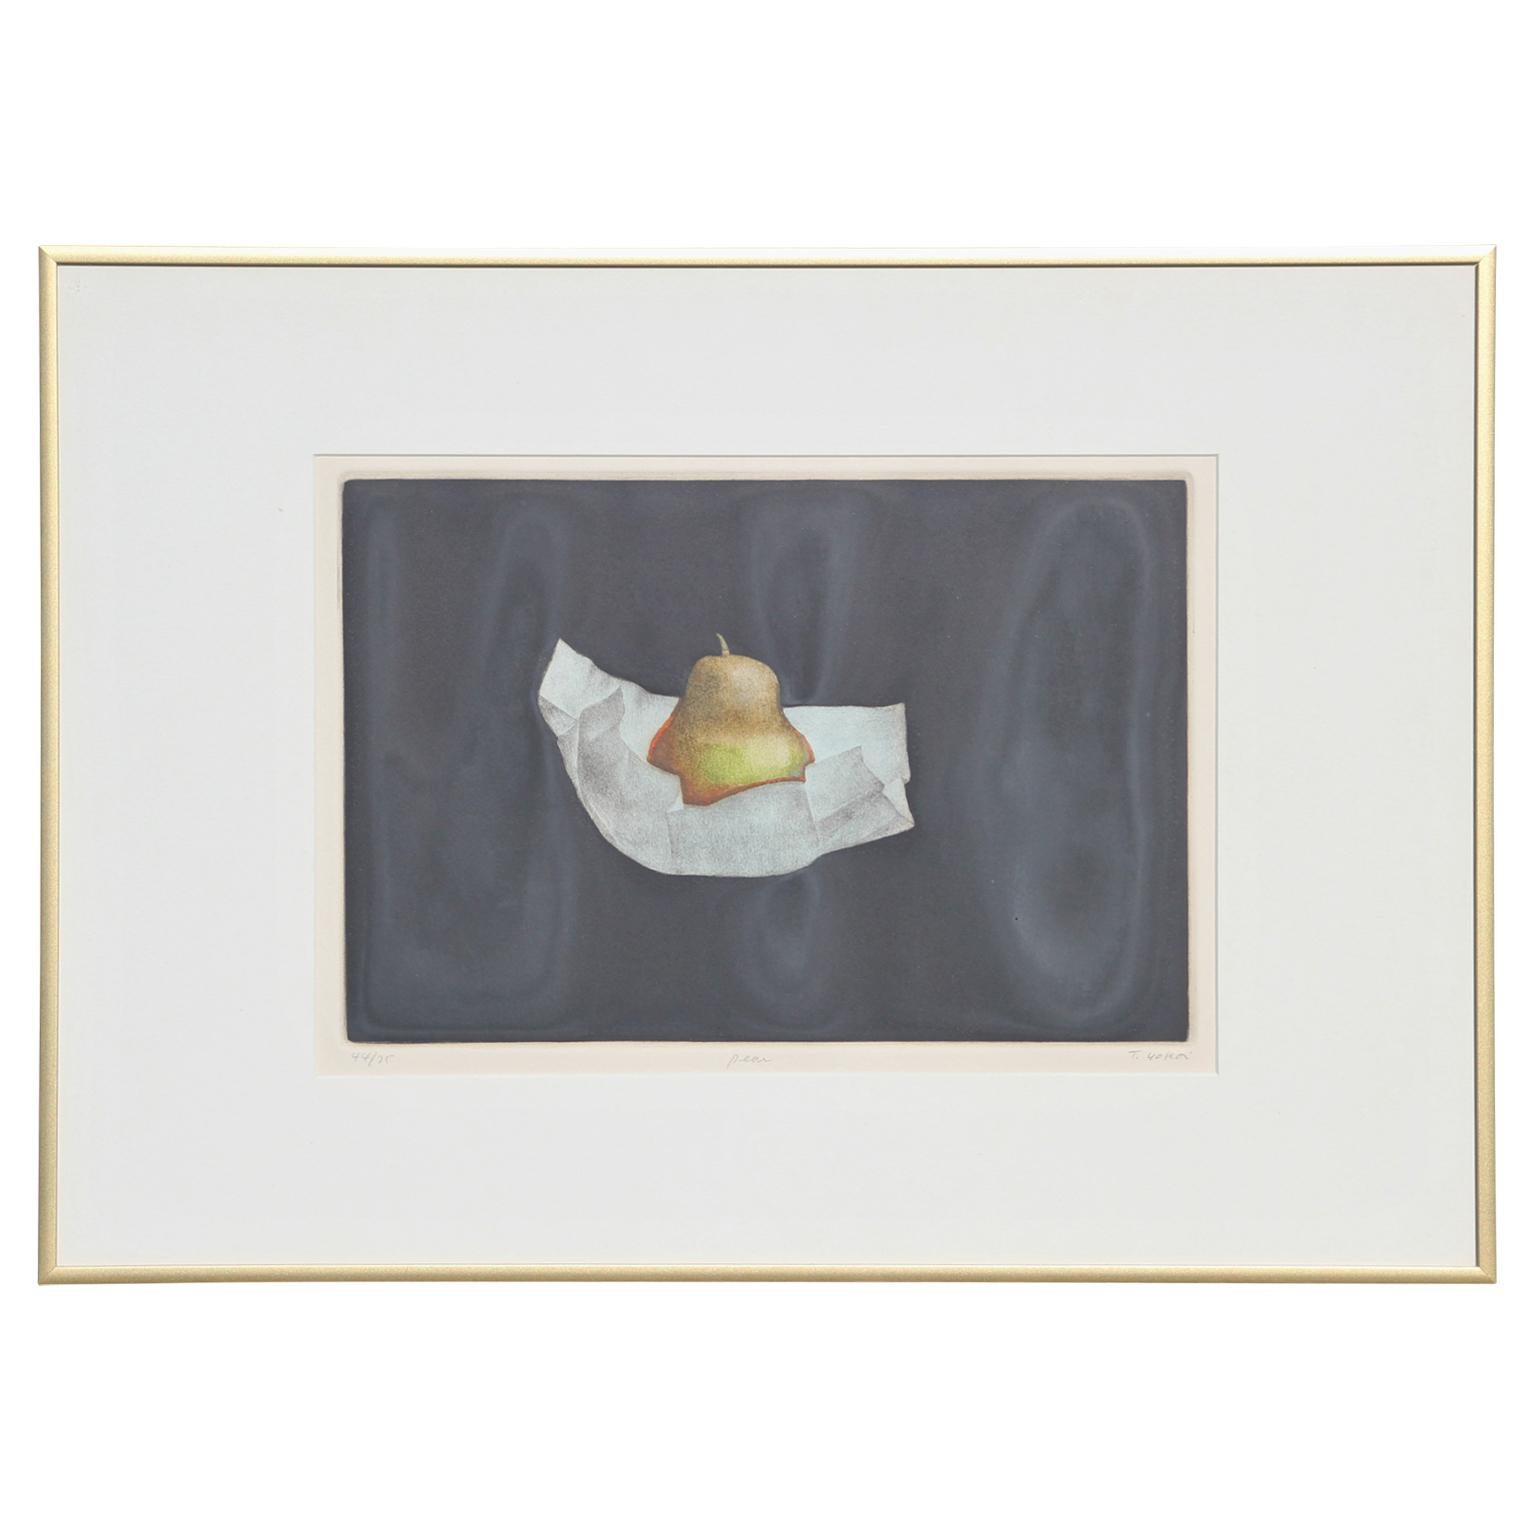 Tomoe Yokoi Interior Print - "Pear" Original Modern Mezzotint of a Pear Against a Black Background 44/75